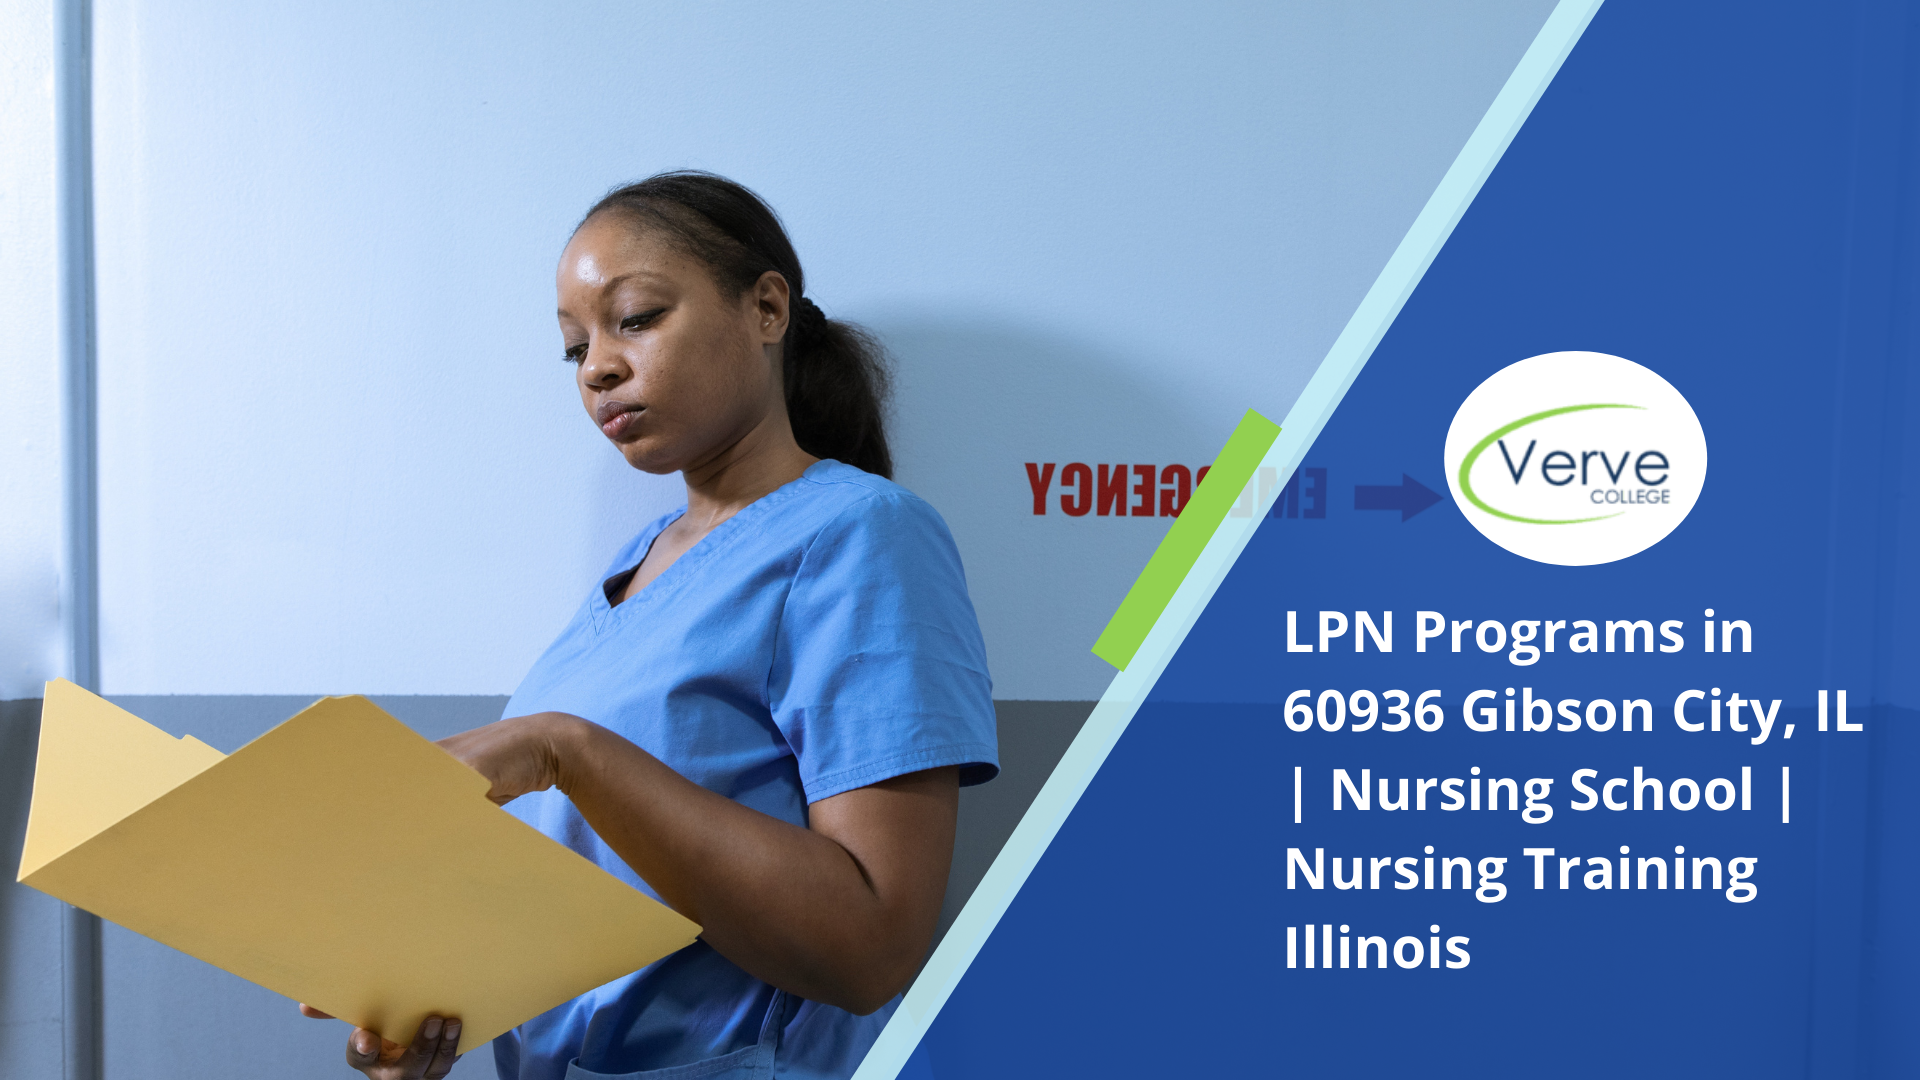 LPN Programs in 60936 Gibson City, IL | Nursing School | Nursing Training Illinois